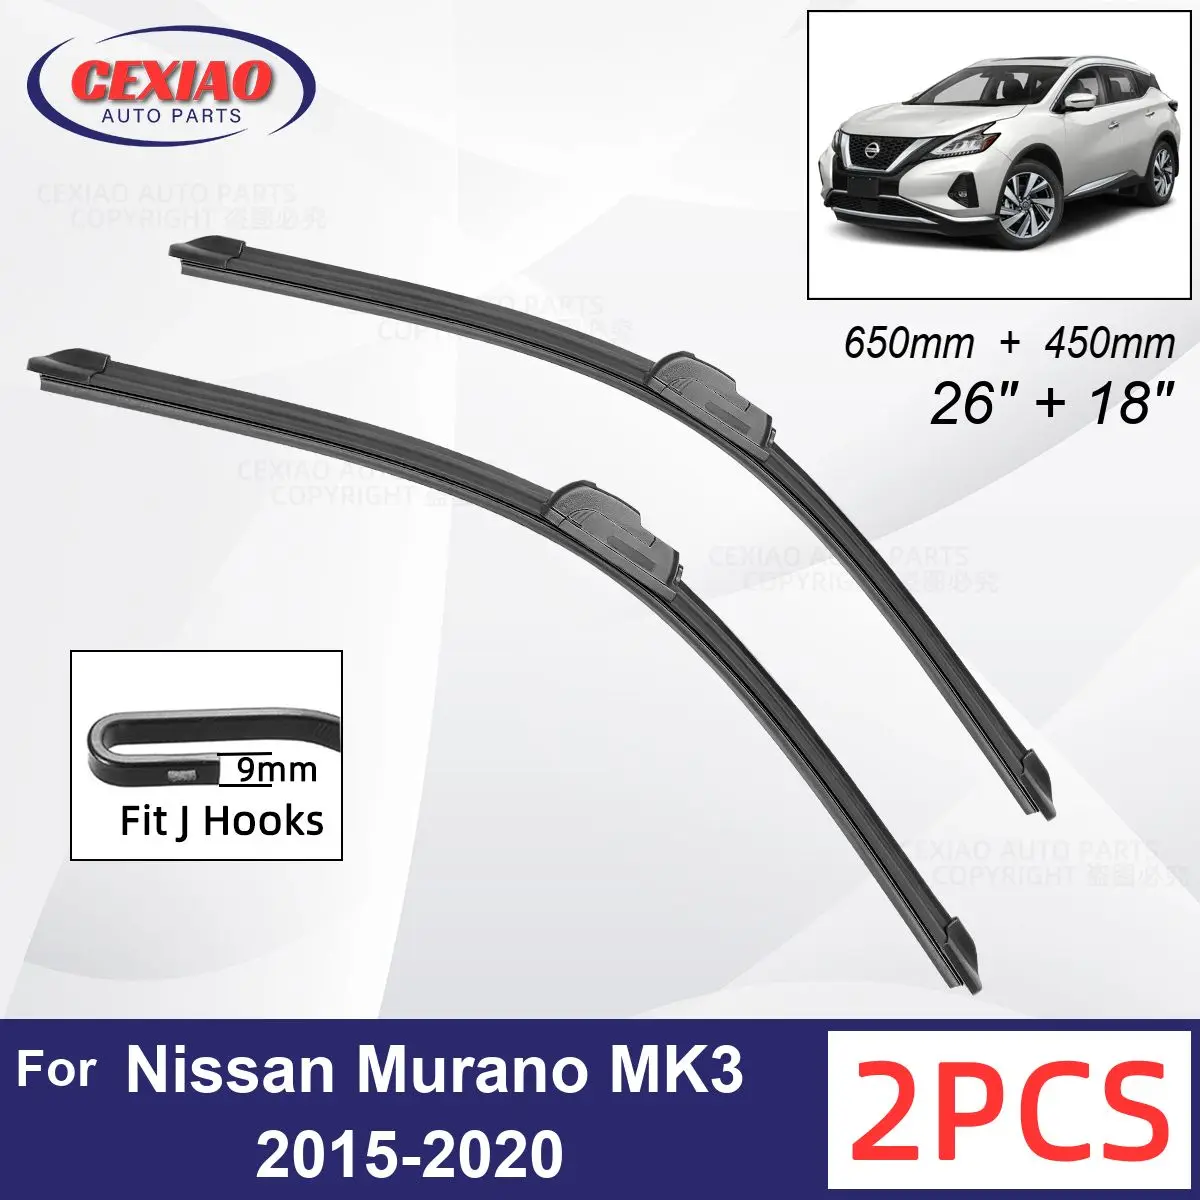 

Car Wiper For Nissan Murano MK3 2015-2020 Front Wiper Blades Soft Rubber Windscreen Wipers Auto Windshield 26"+18" 650mm + 450mm